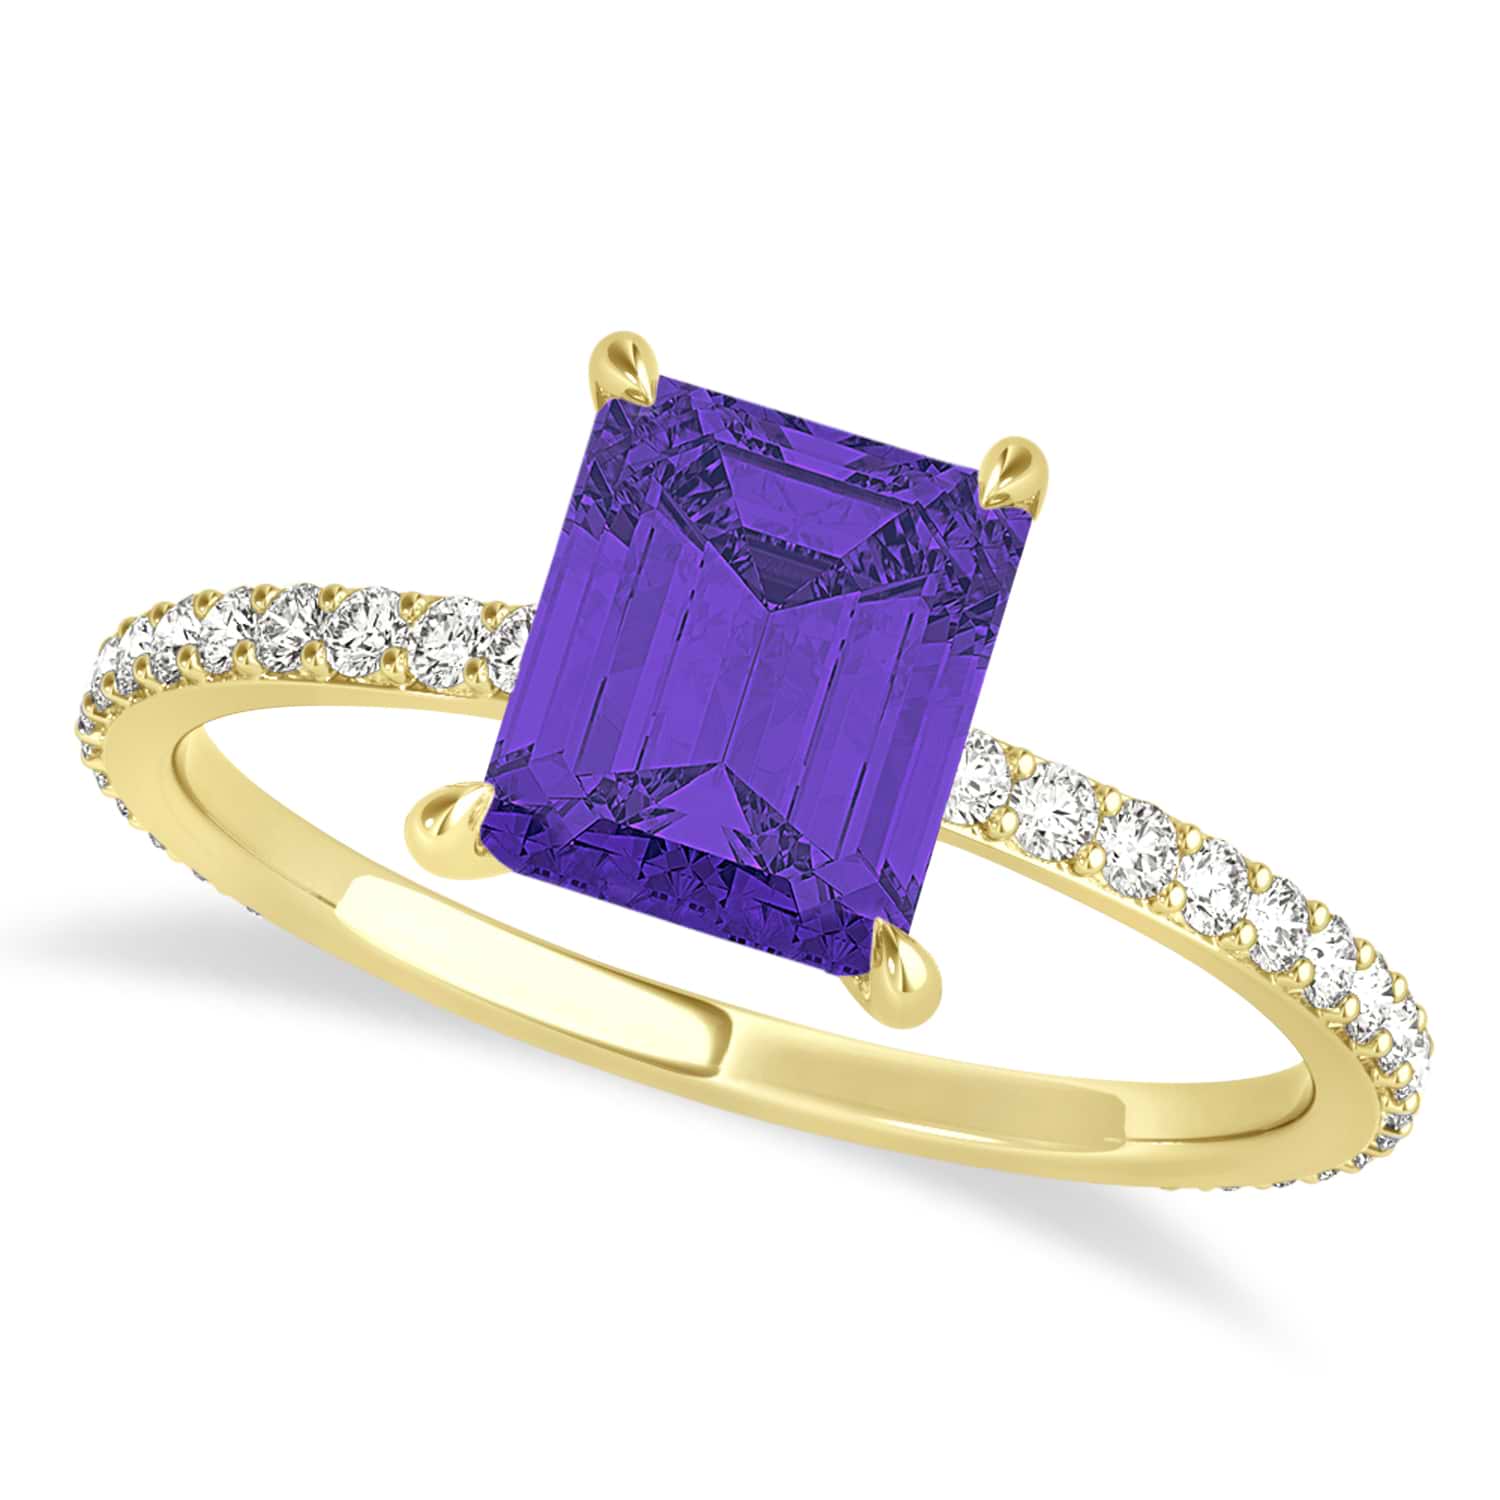 Emerald Tanzanite & Diamond Hidden Halo Engagement Ring 18k Yellow Gold (2.93ct)